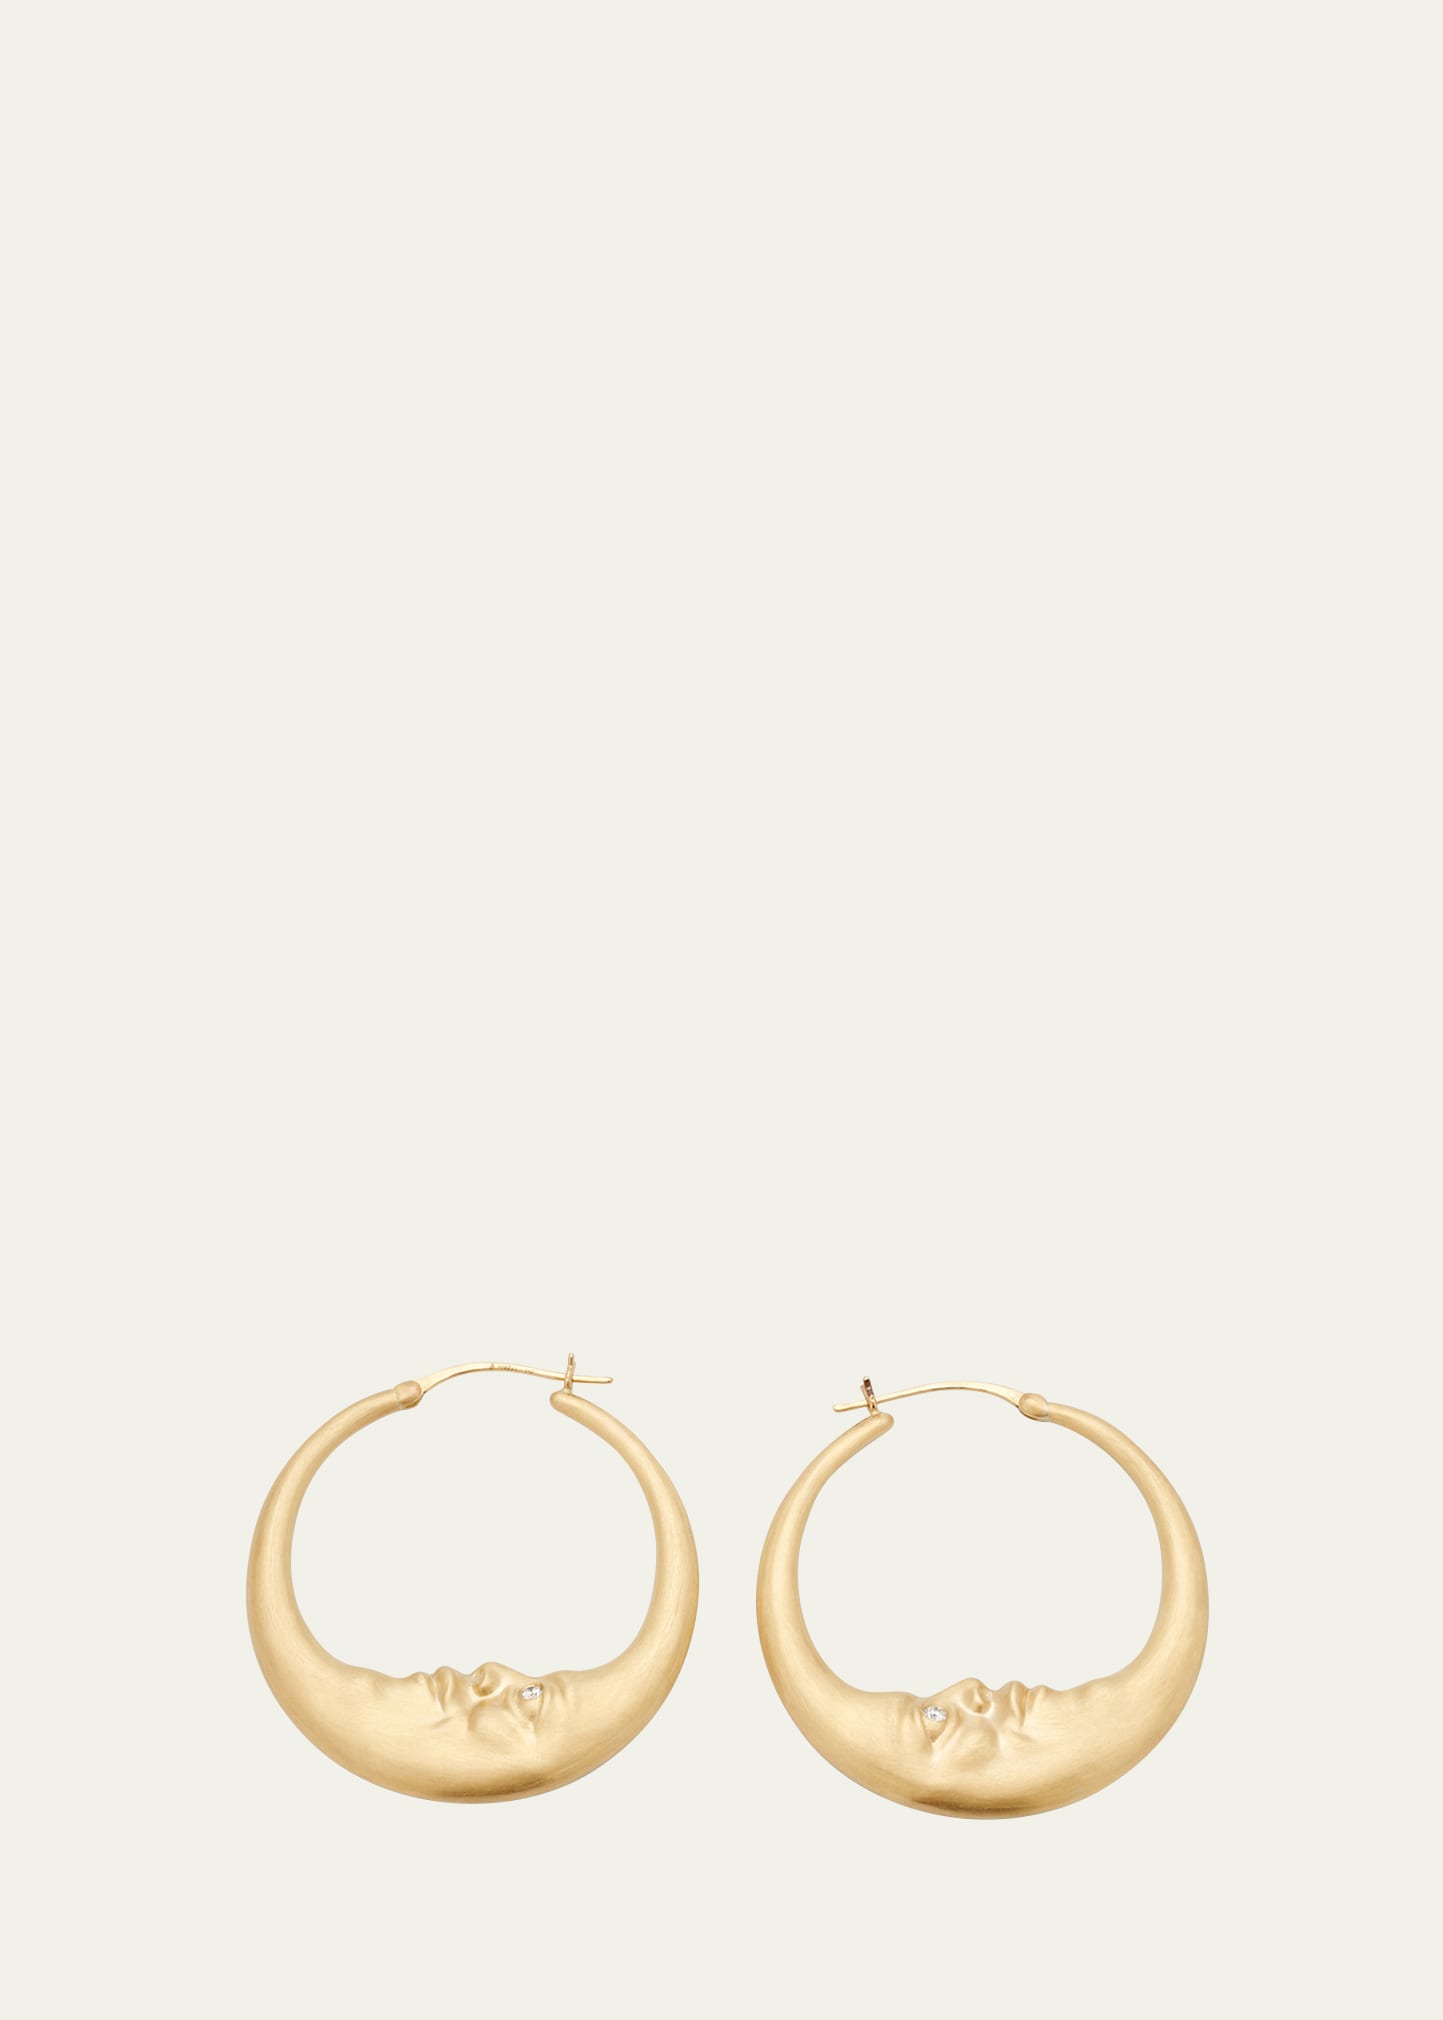 40mm Crescent Moon Hoop Earrings in 18k Gold